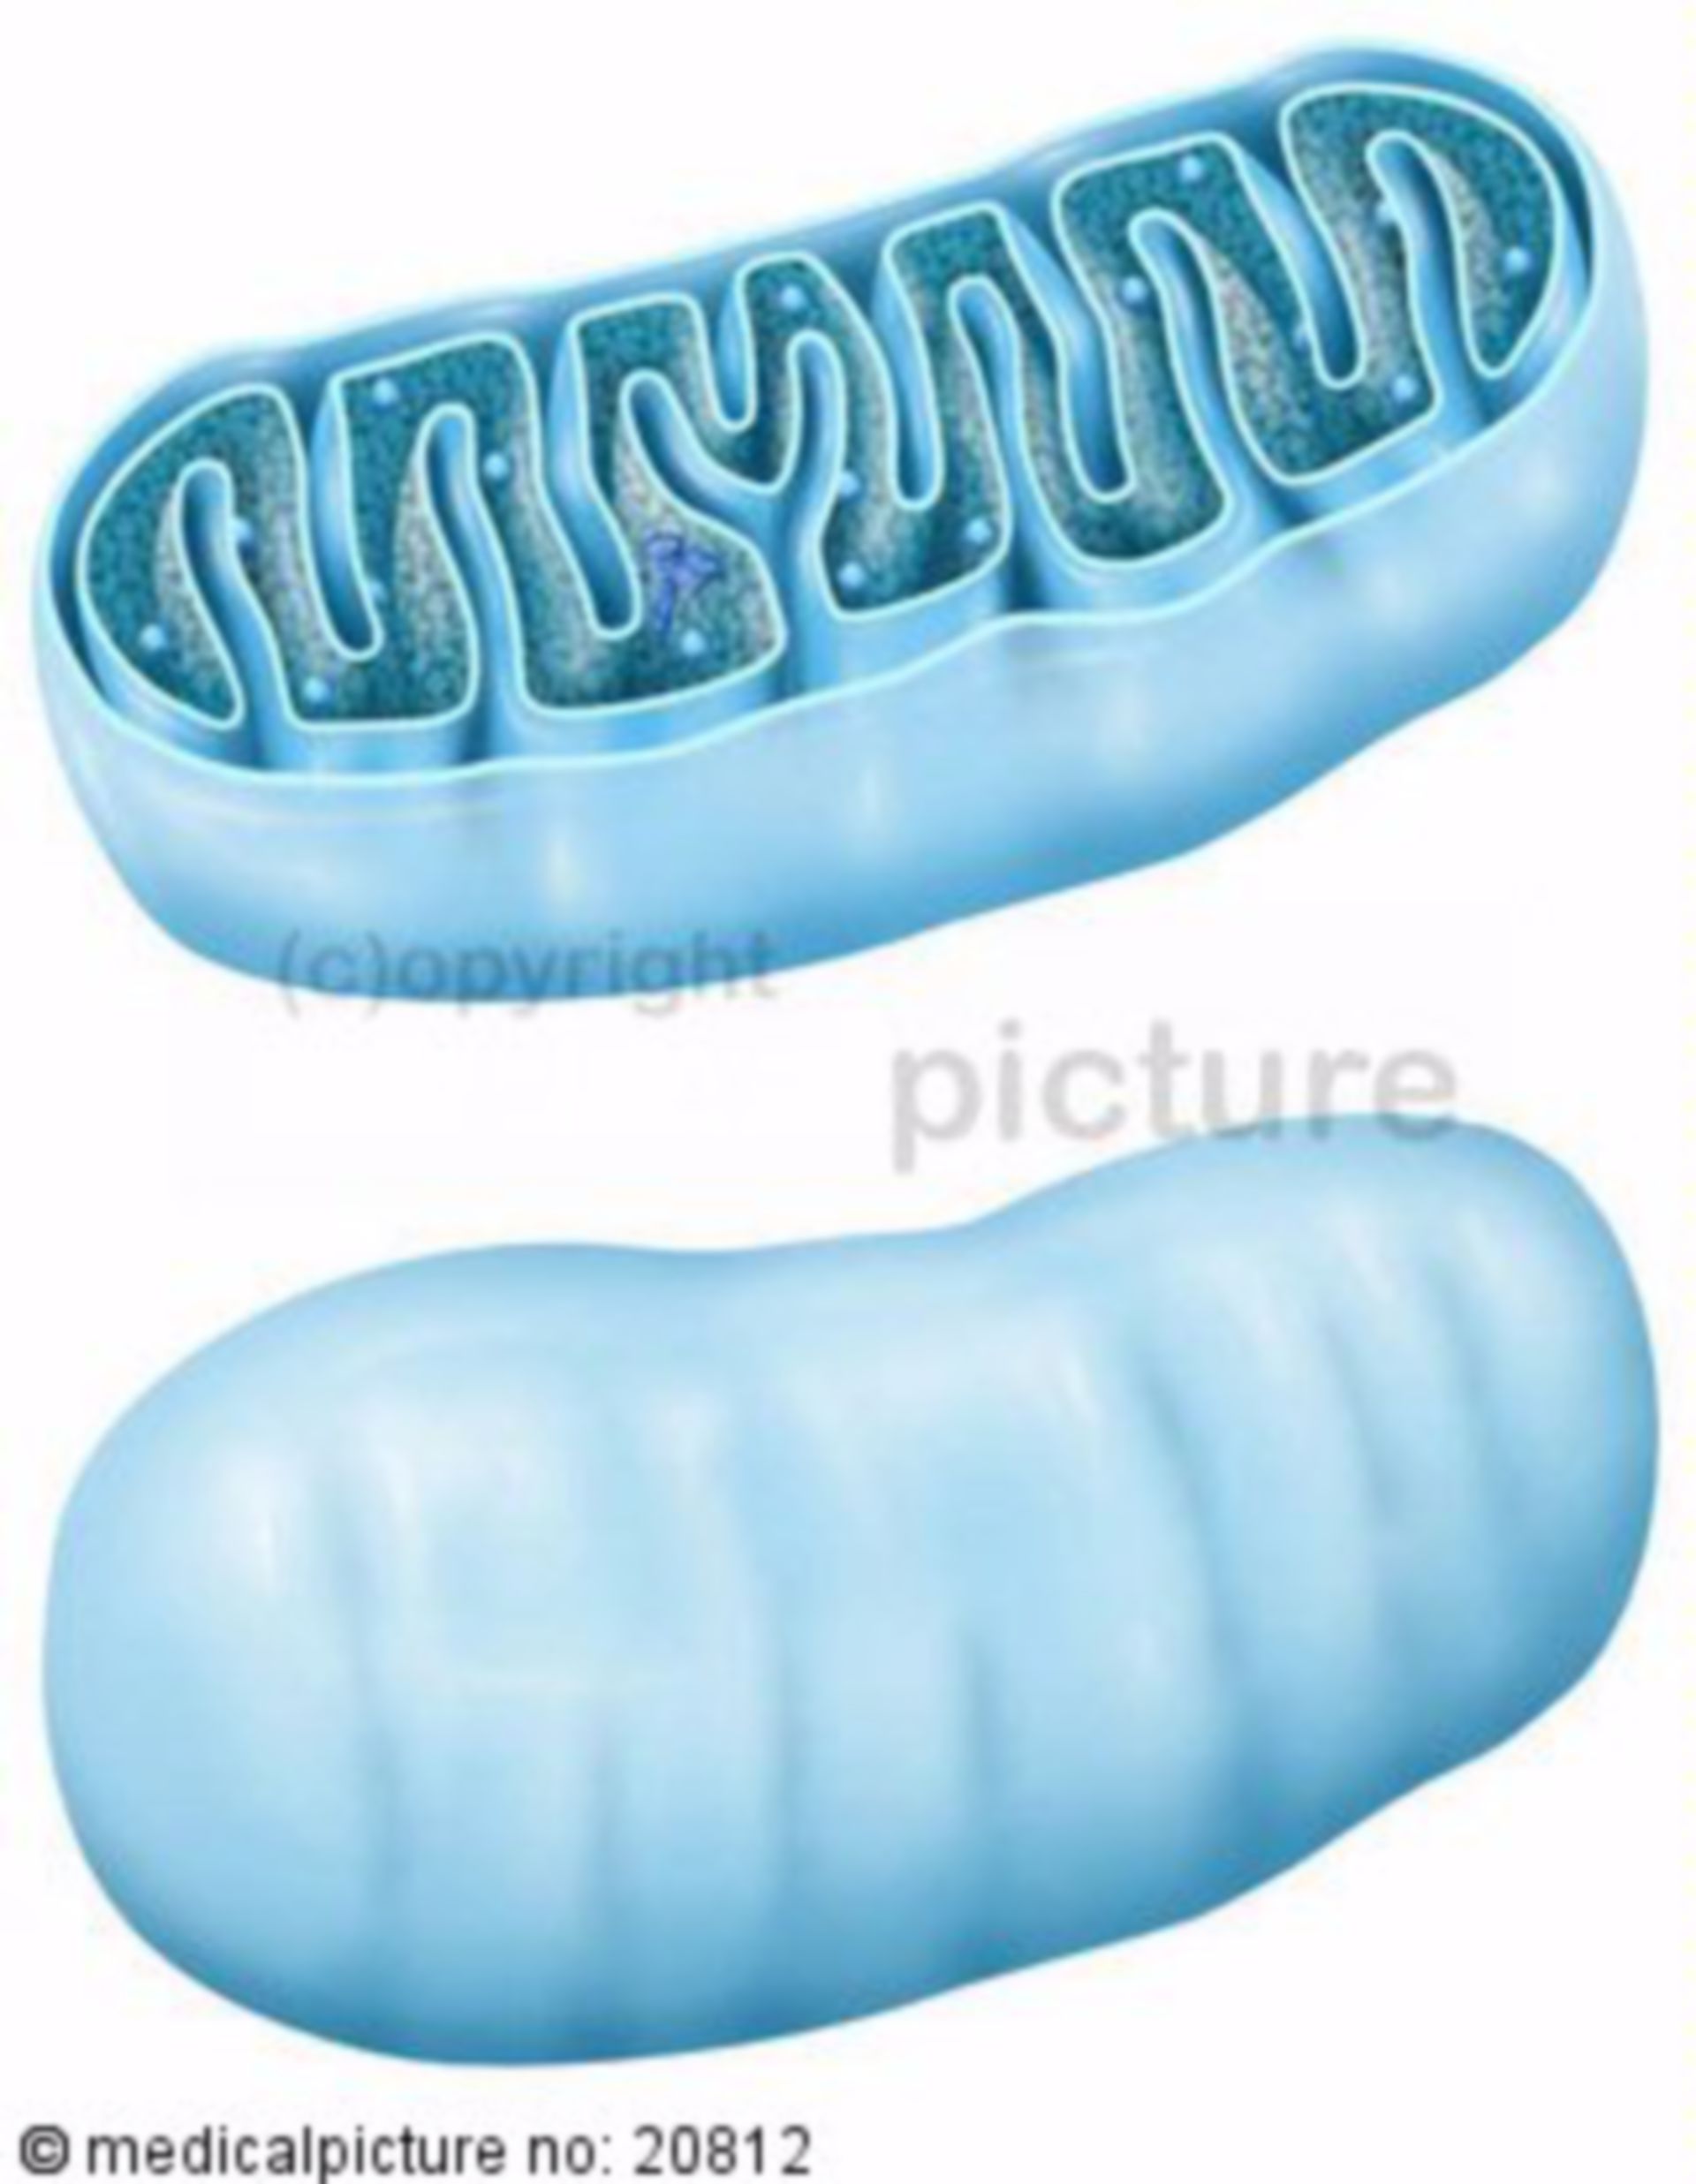  Mitochondrium im Anschnitt 
